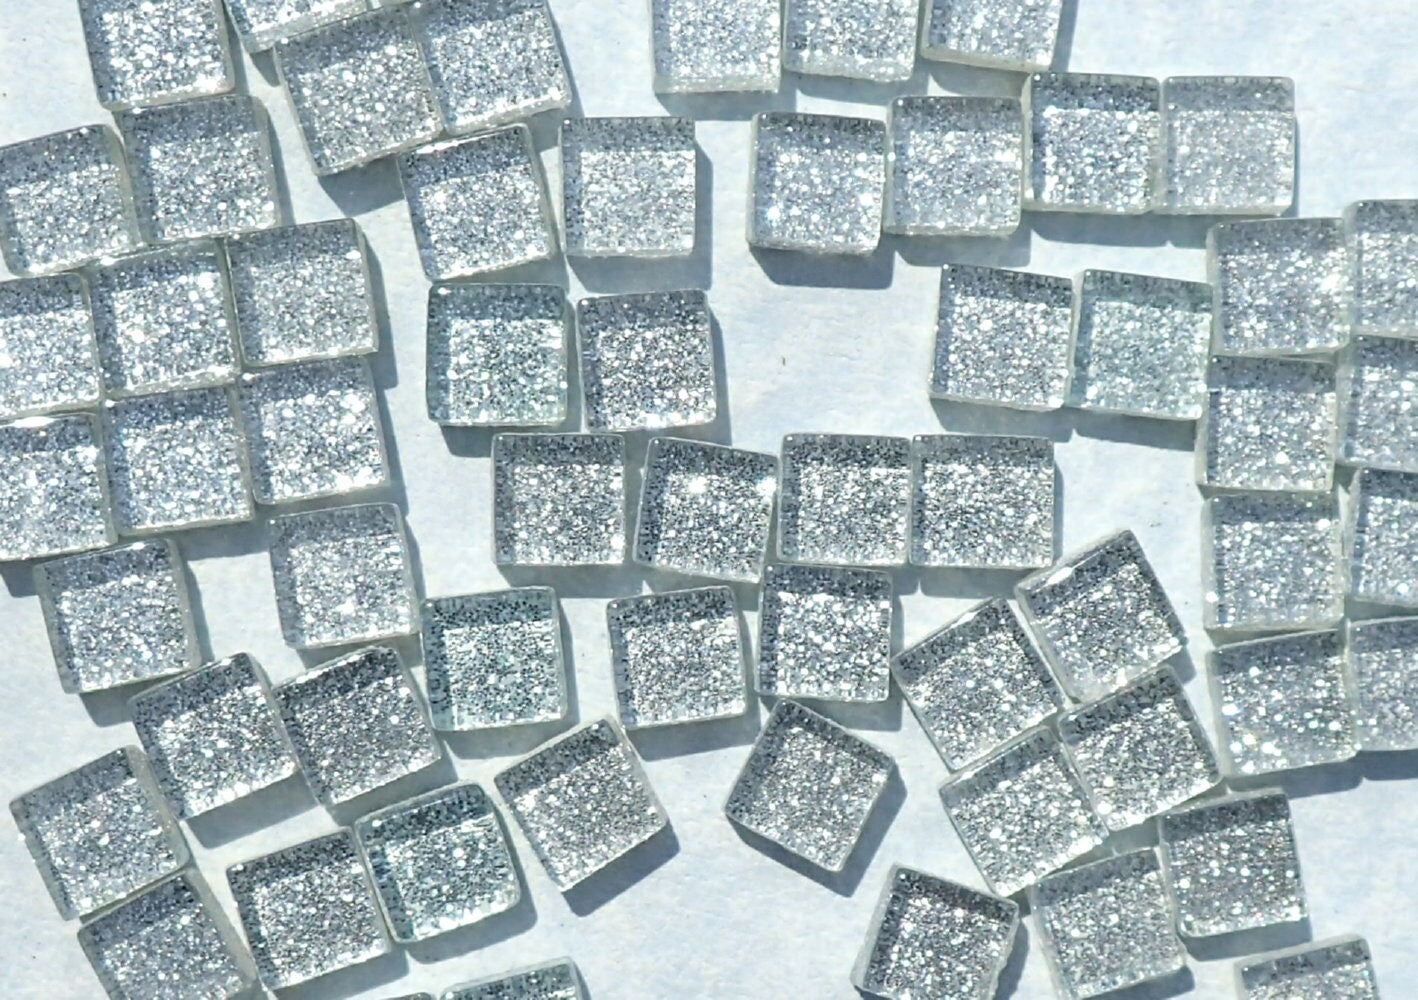 Silver Glitter Tiles - 1 cm - 100g - Over 100 Metallic Glass Tiles - Shiny Silver